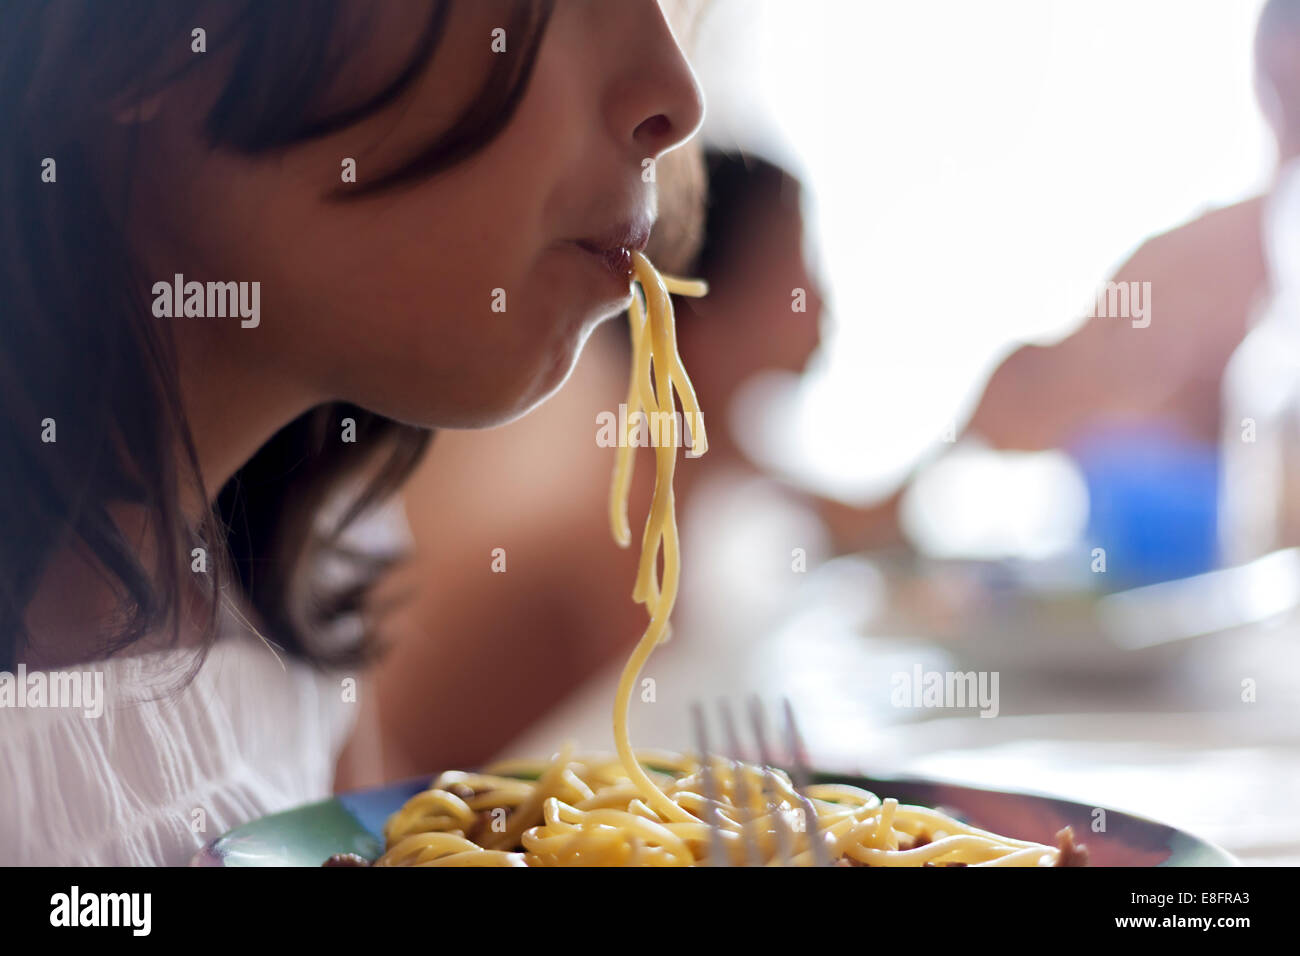 Close-up portrait of girl eating spaghetti Stock Photo